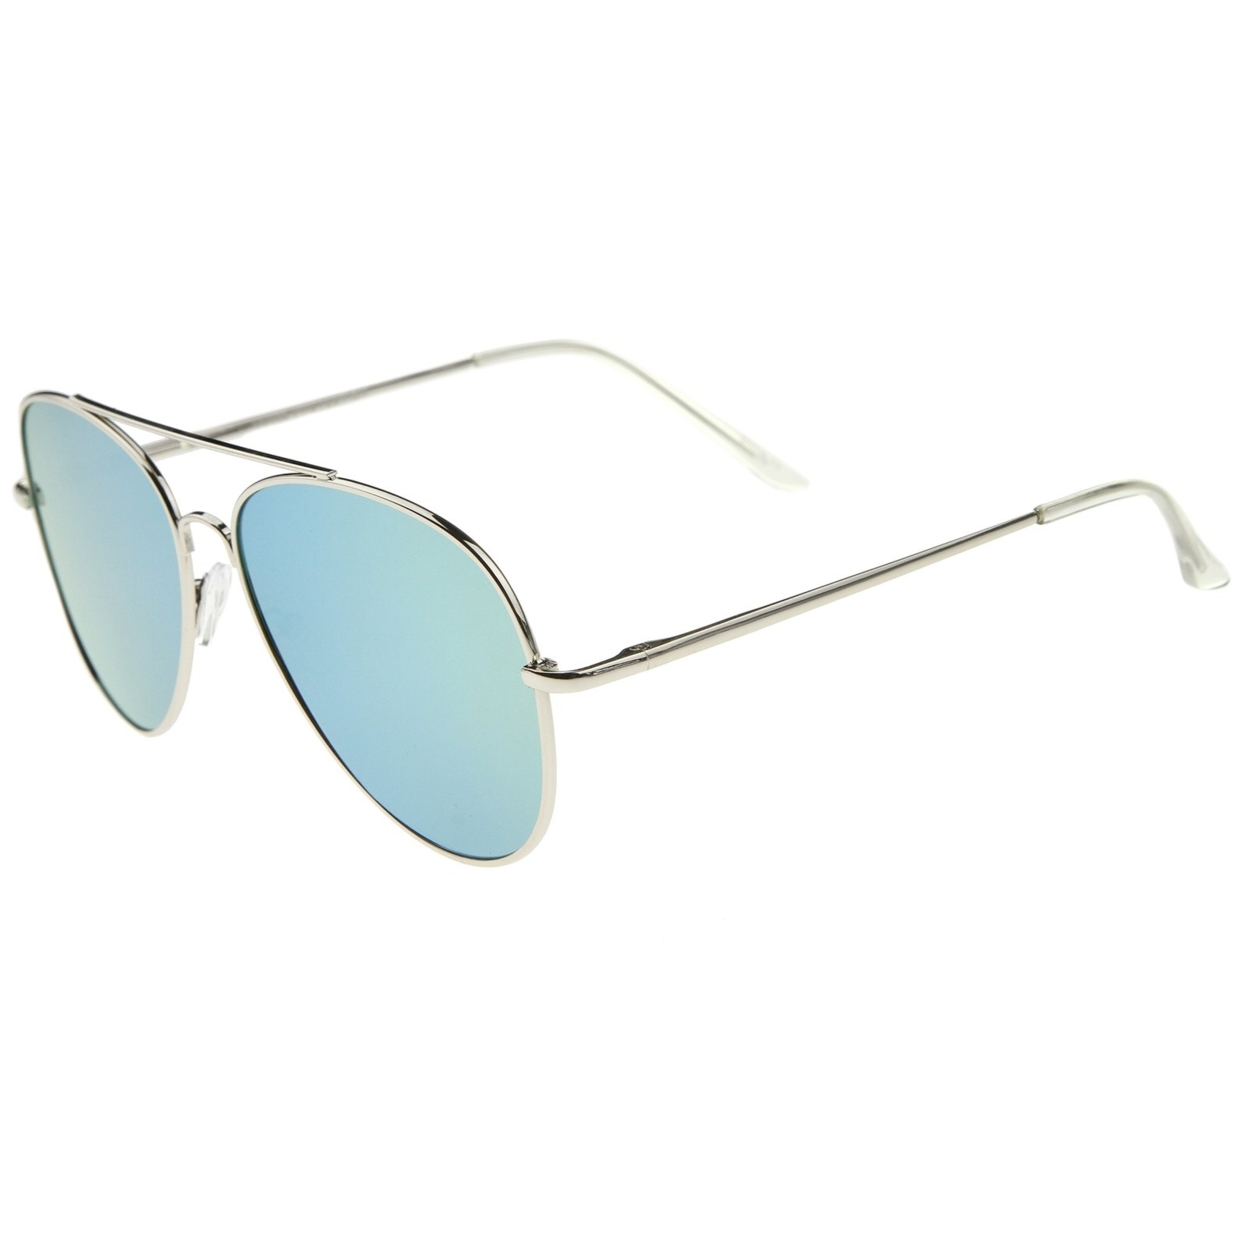 Large Full Metal Color Mirror Teardrop Flat Lens Aviator Sunglasses 60mm - Silver / Orange Mirror